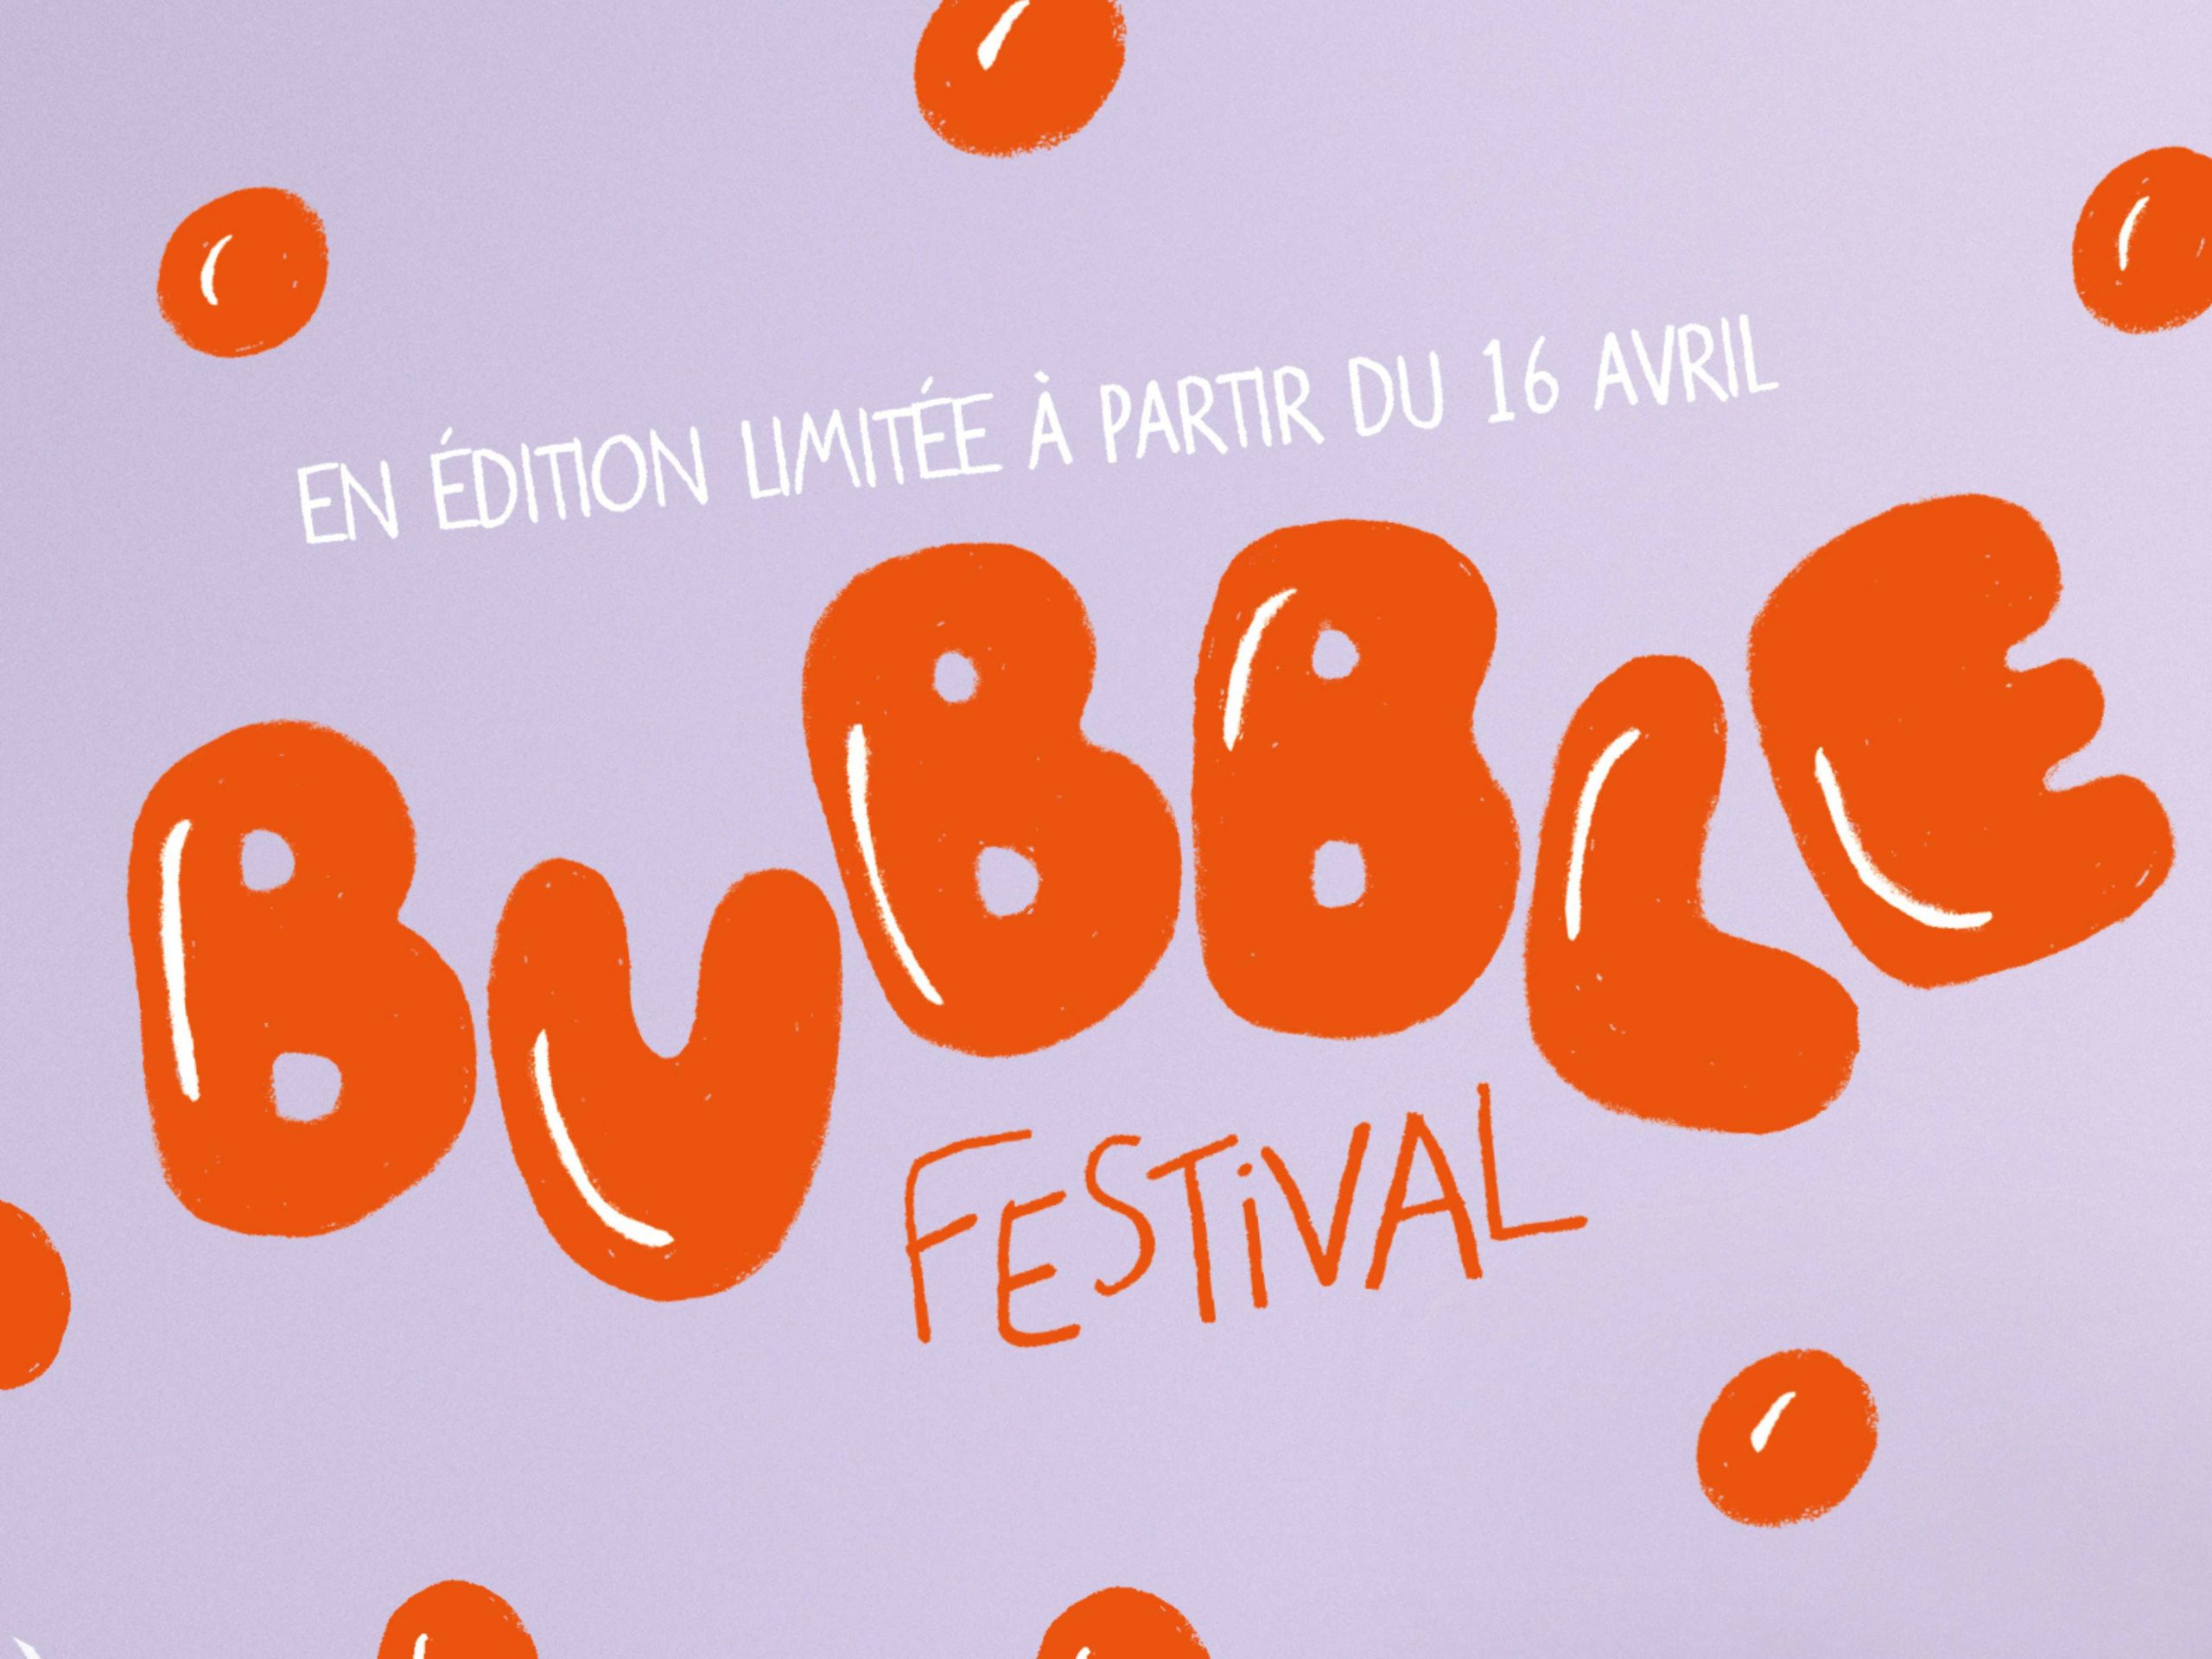 Bubble festival 